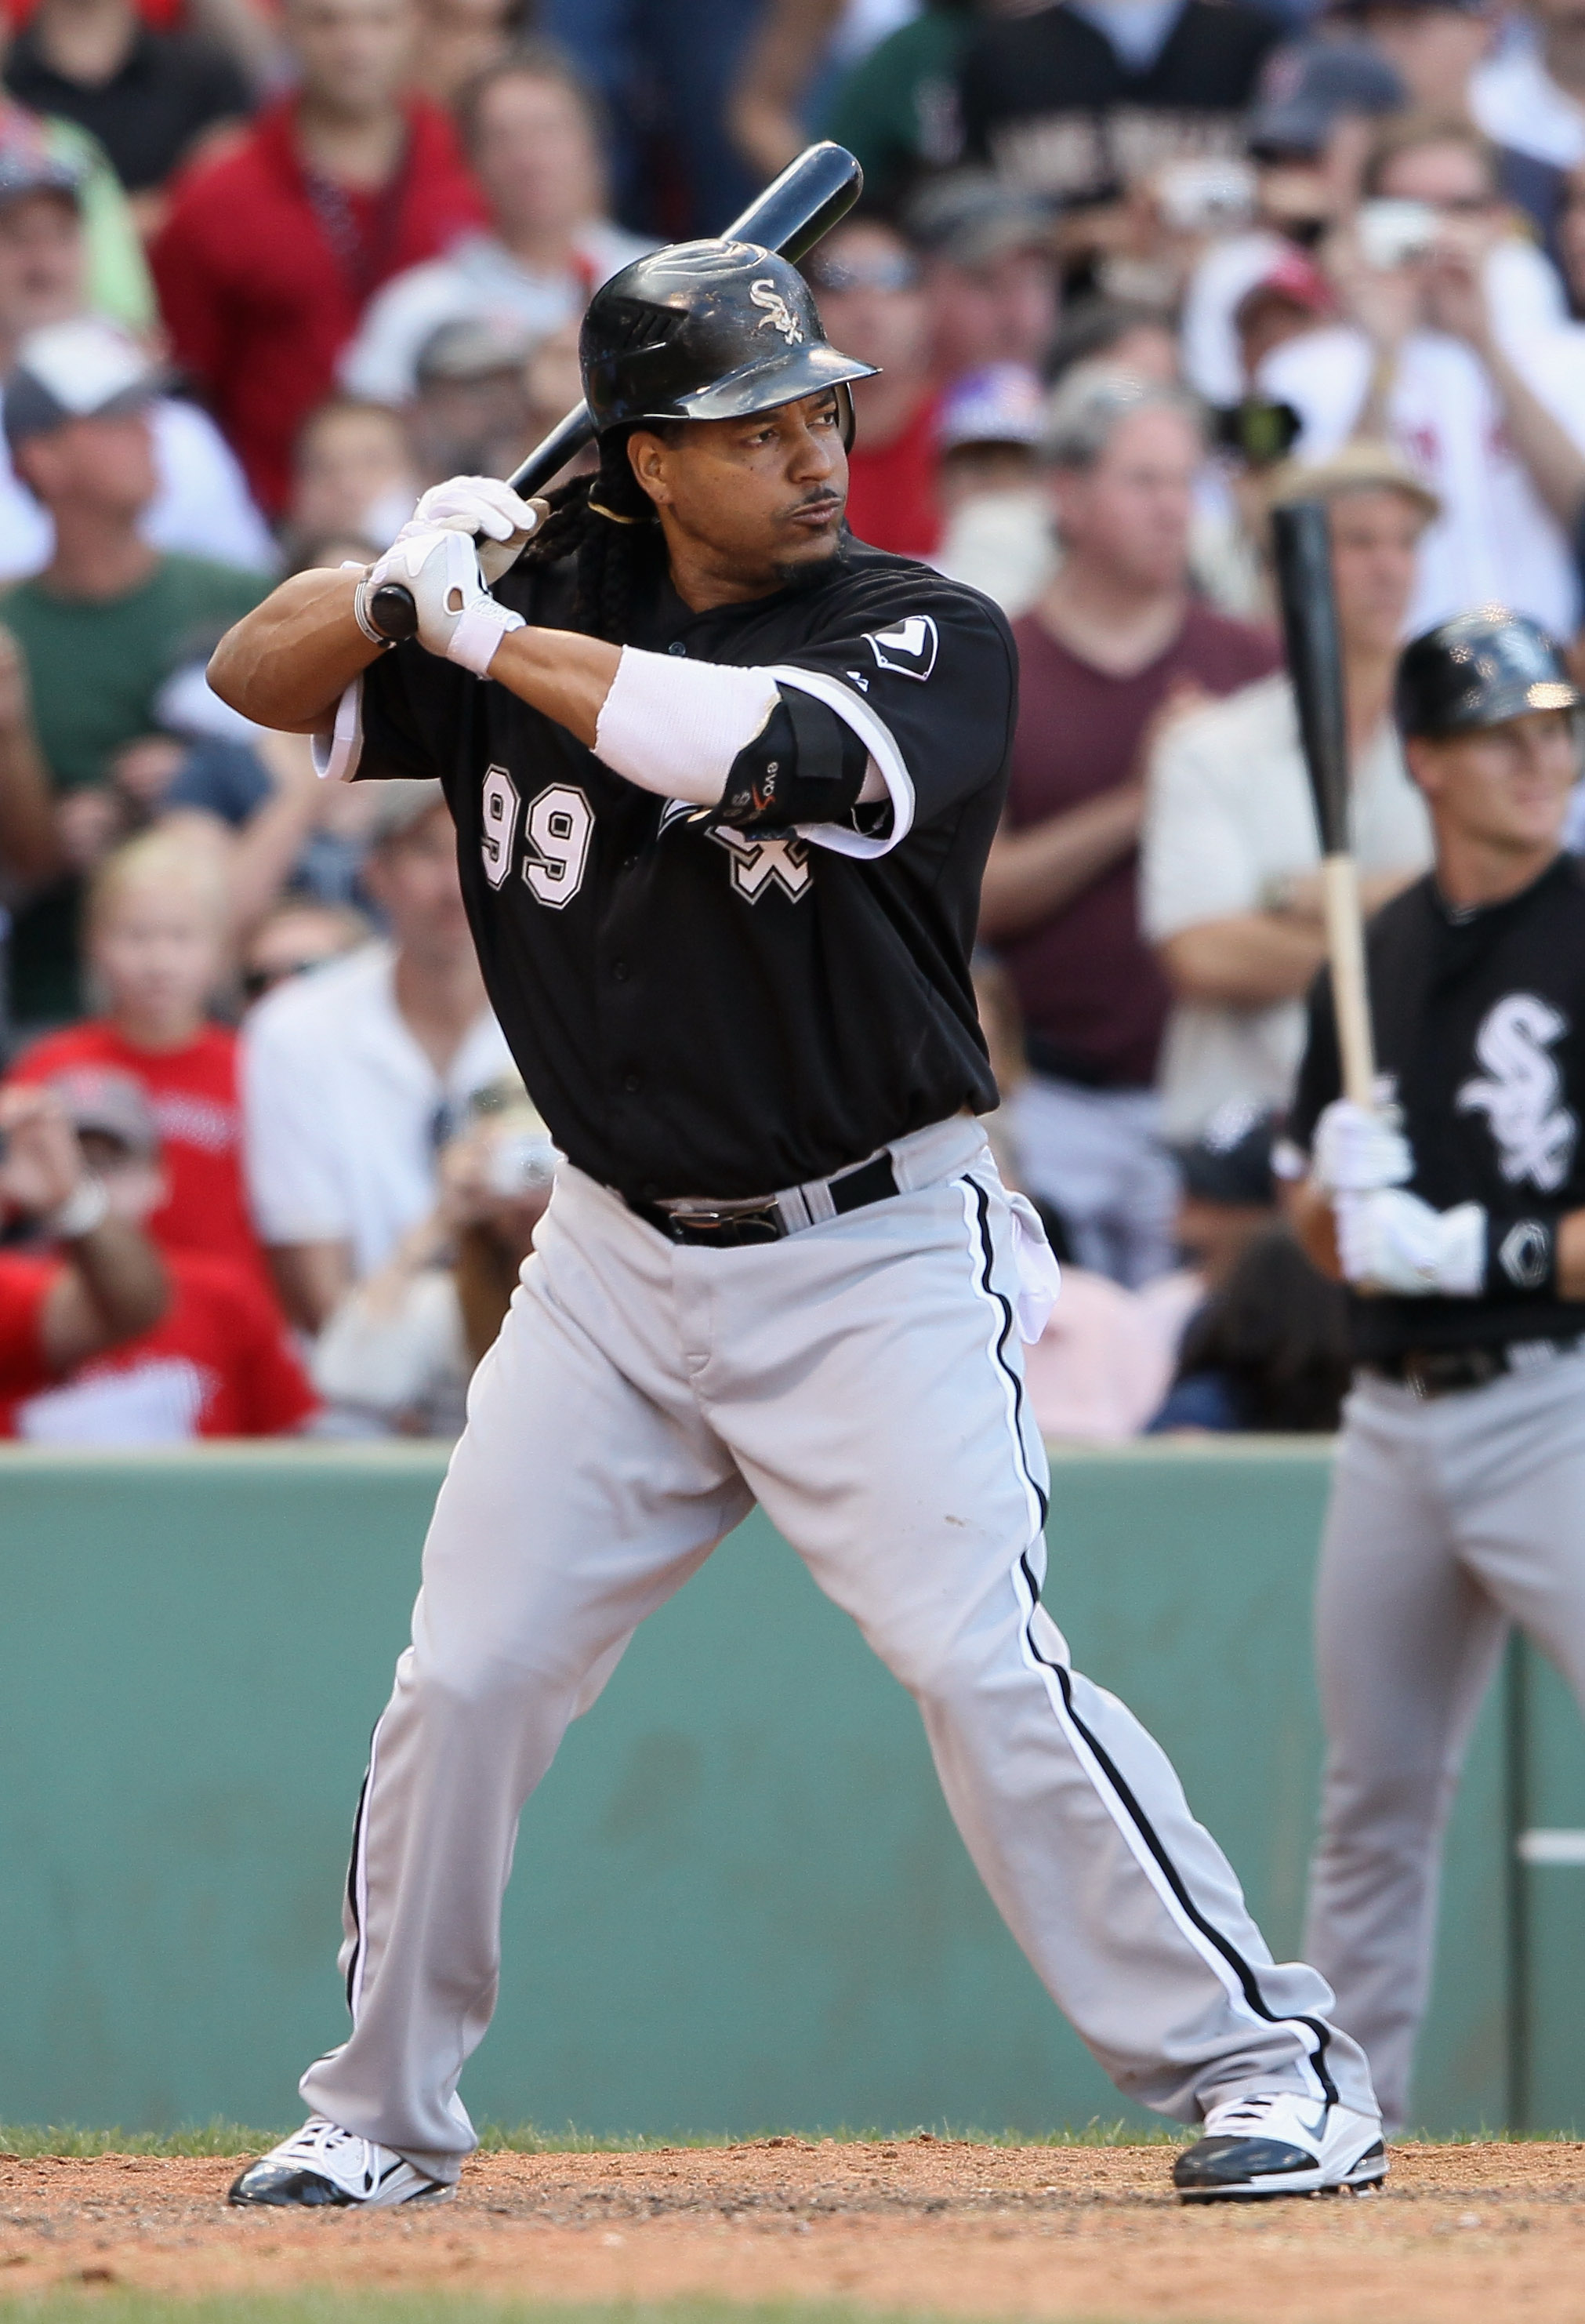 MLB Rumors: Could Manny Ramirez Help the New York Yankees?